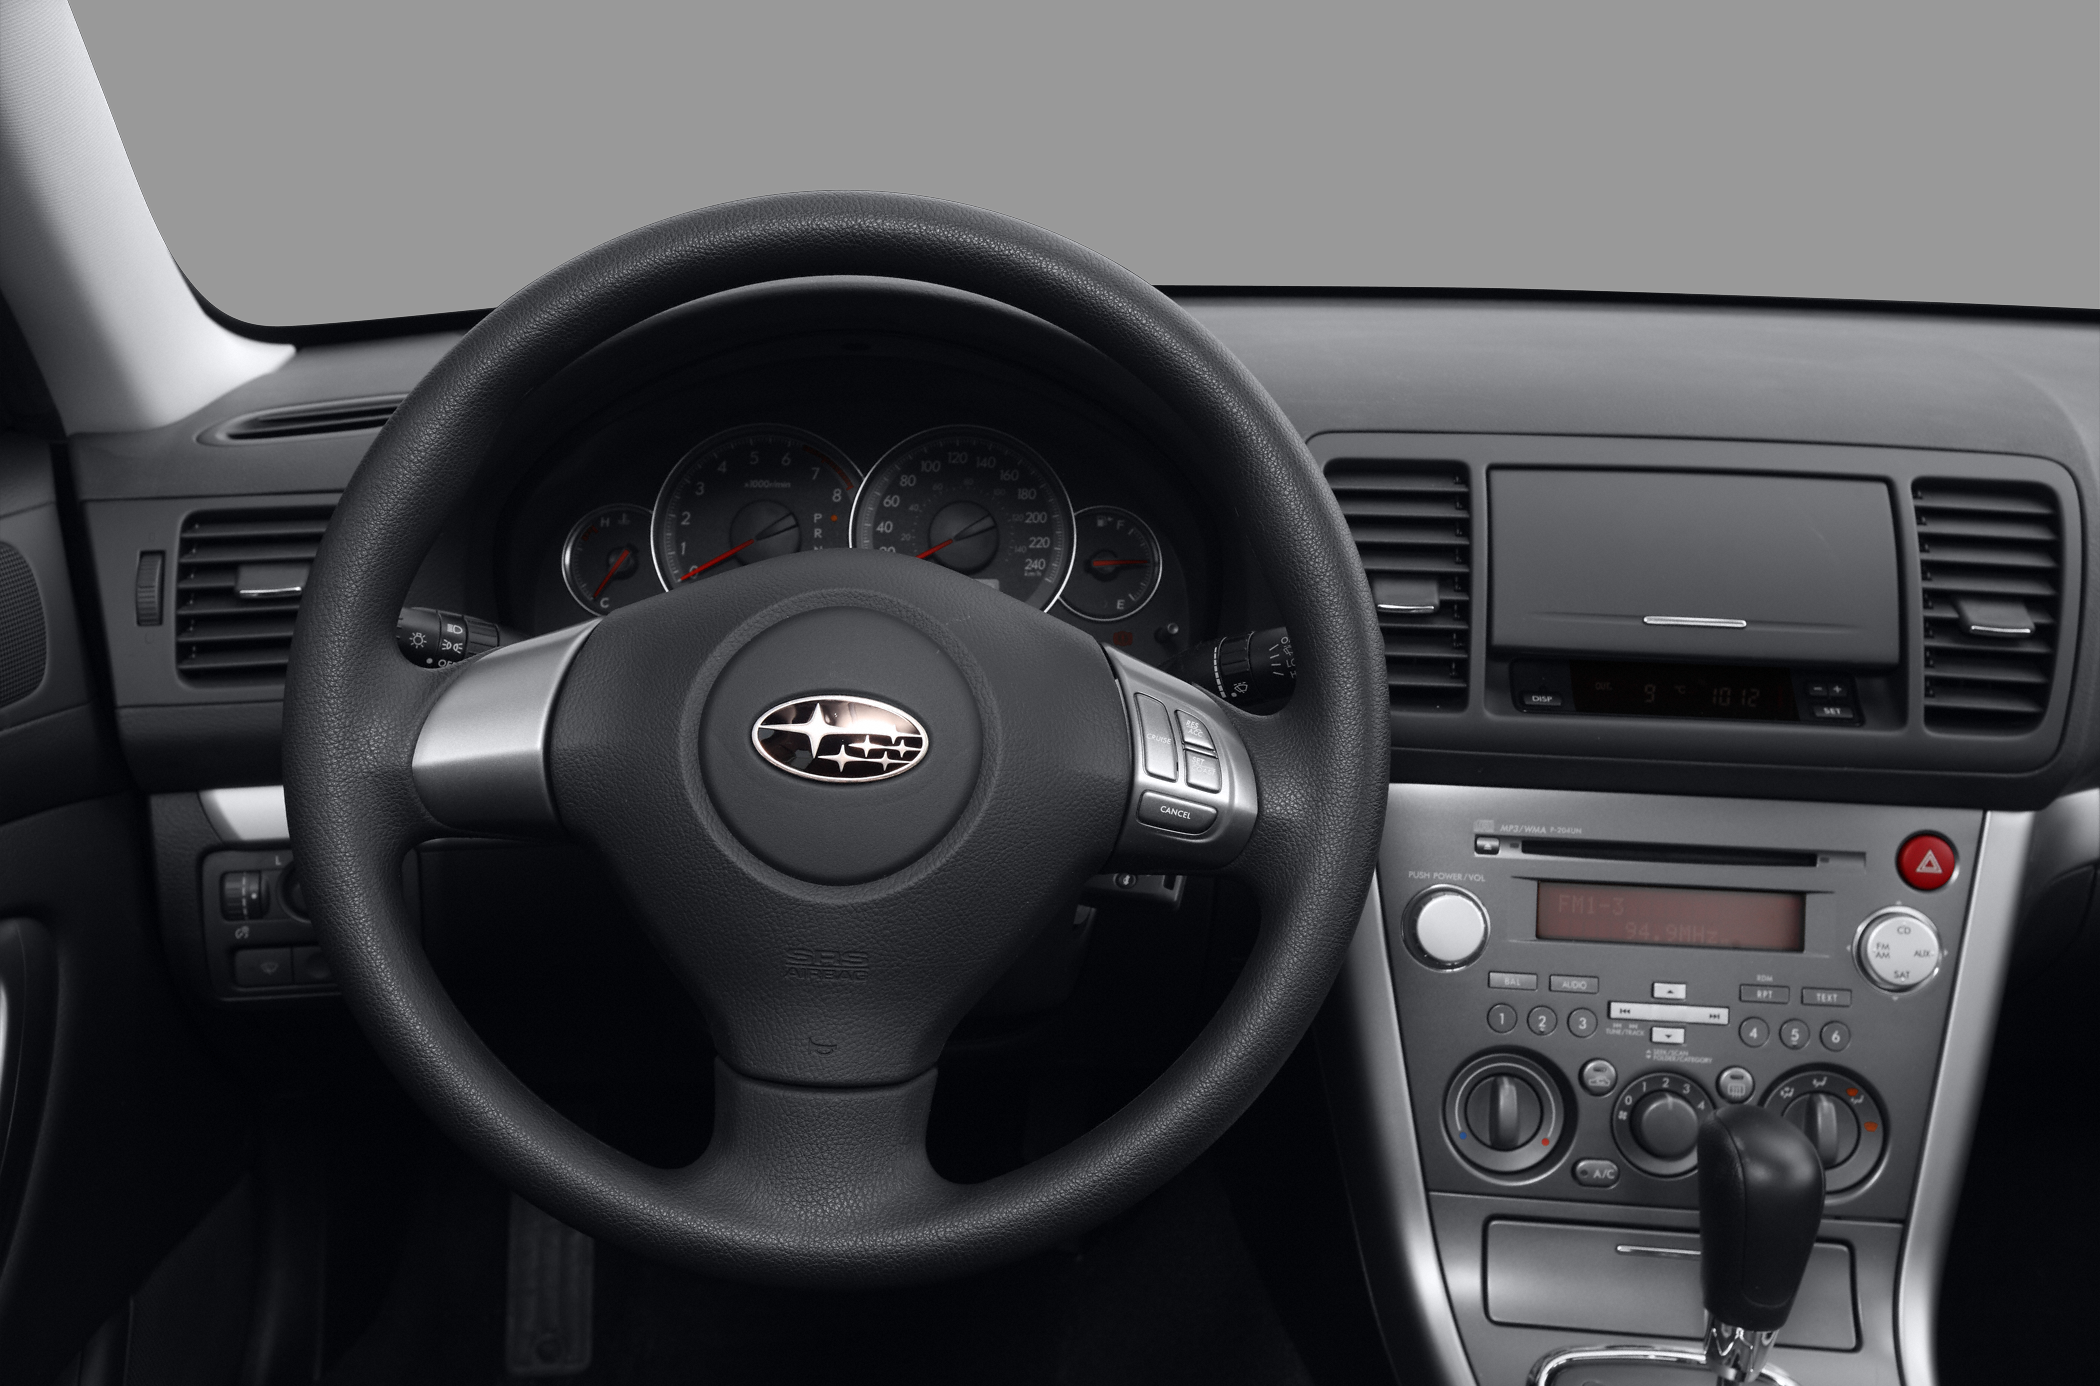 2008 Subaru Legacy